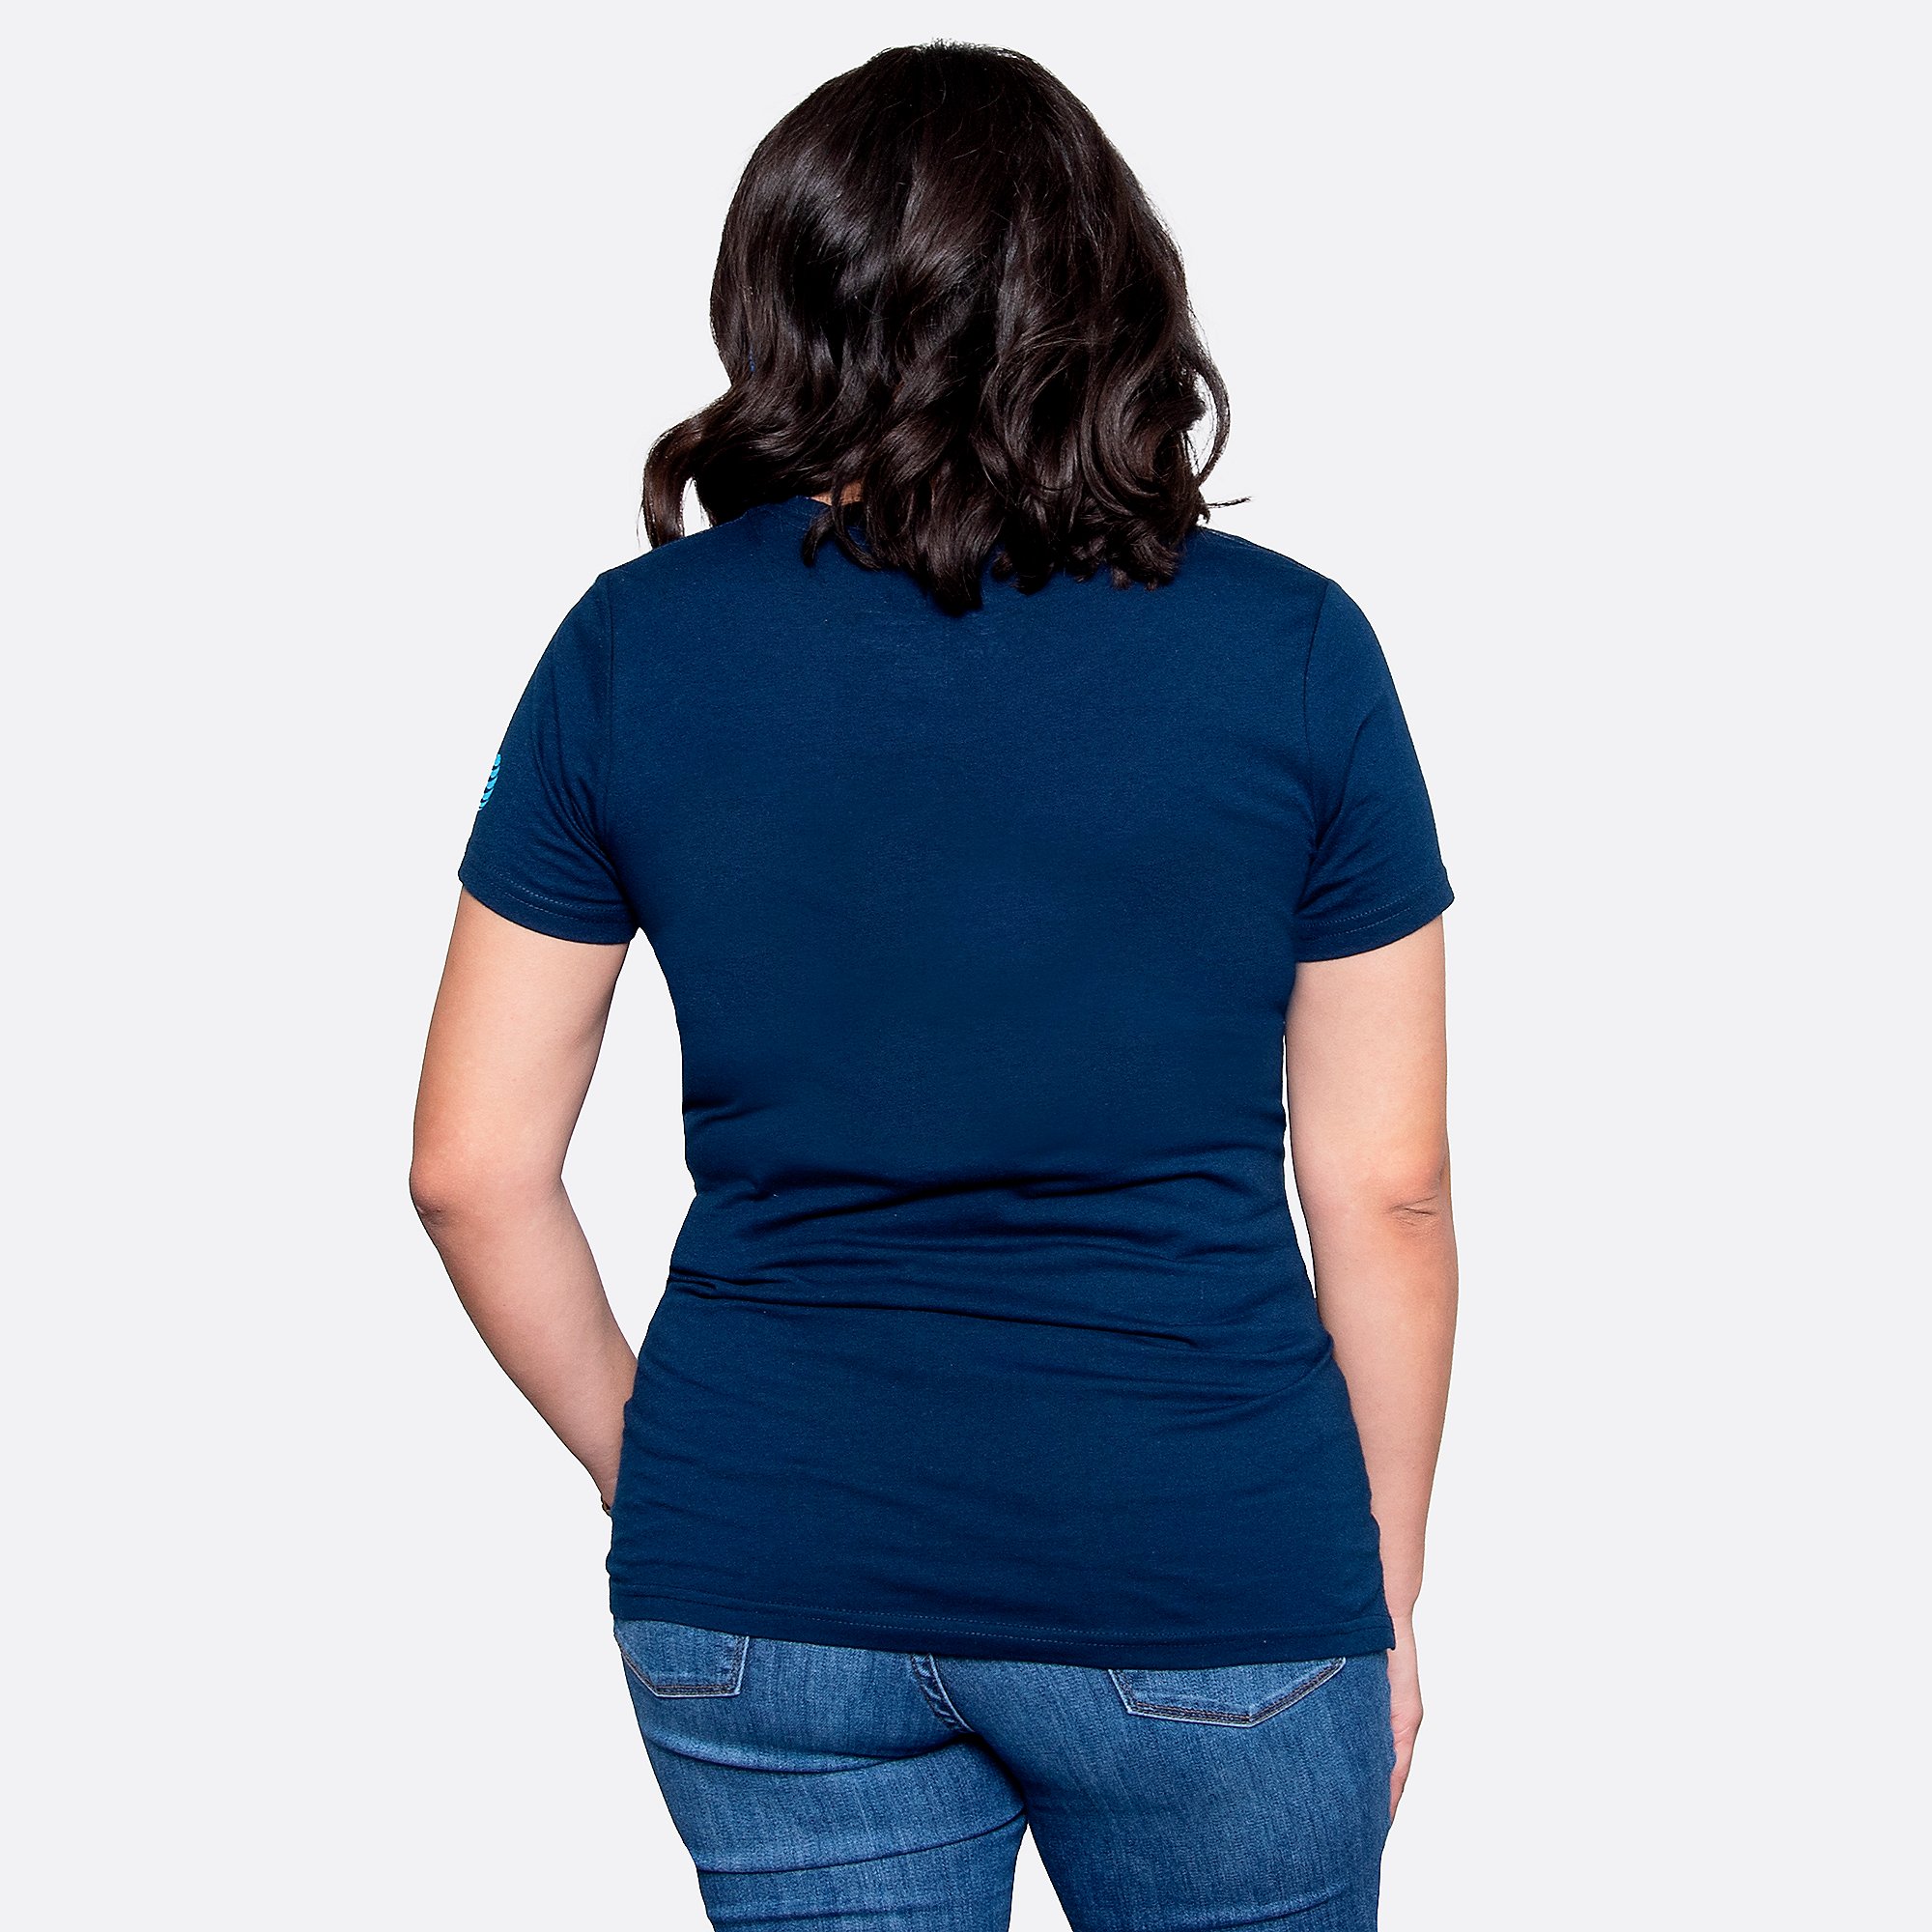 AT&T Team Colors Aria Womens Maternity Short Sleeve T-Shirt